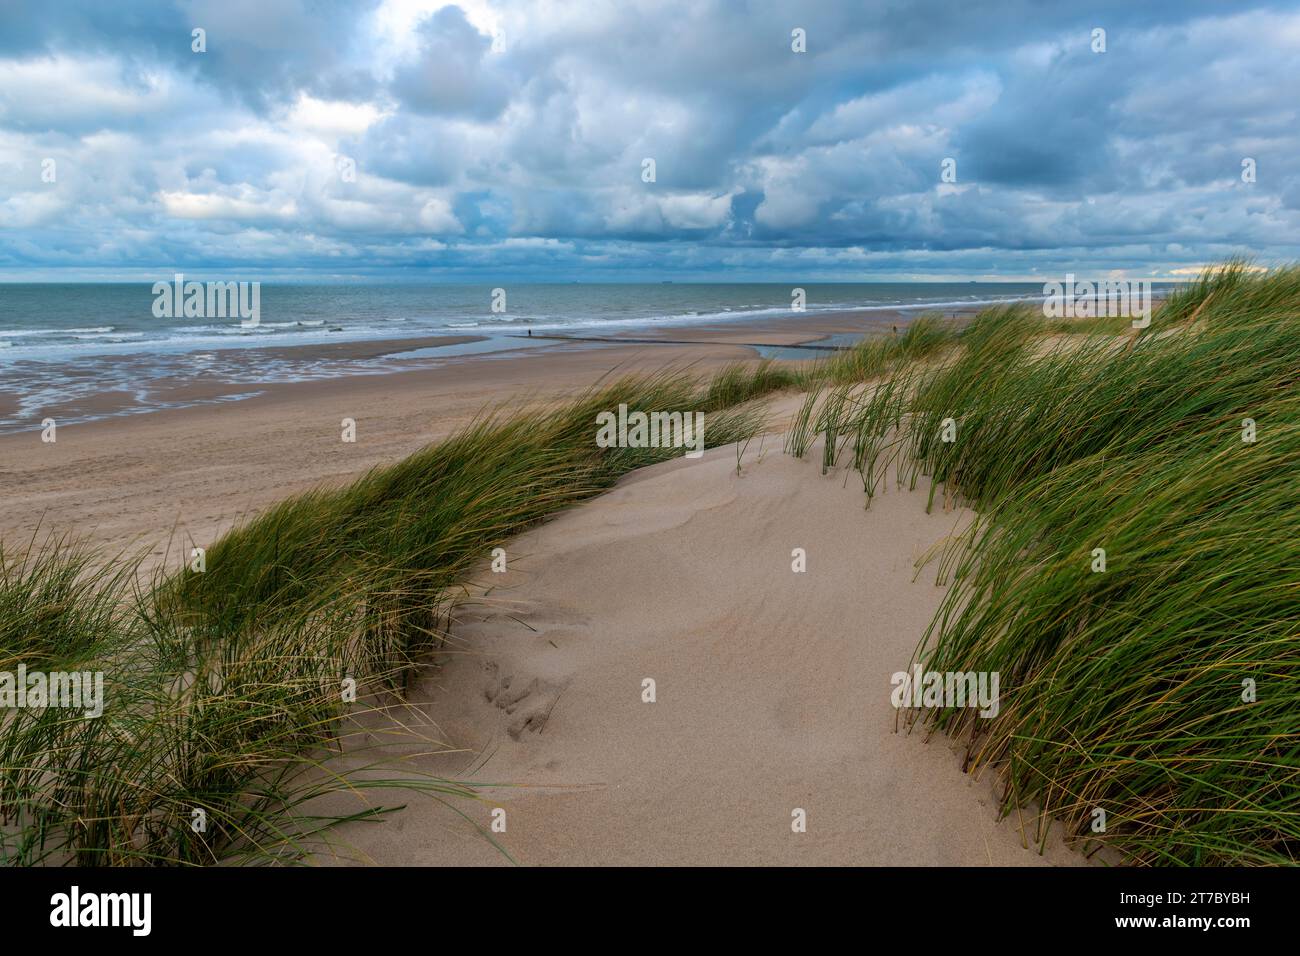 Sand dunes and North Sea beach with rainy dramatic sky, West Flanders, Belgium. Stock Photo